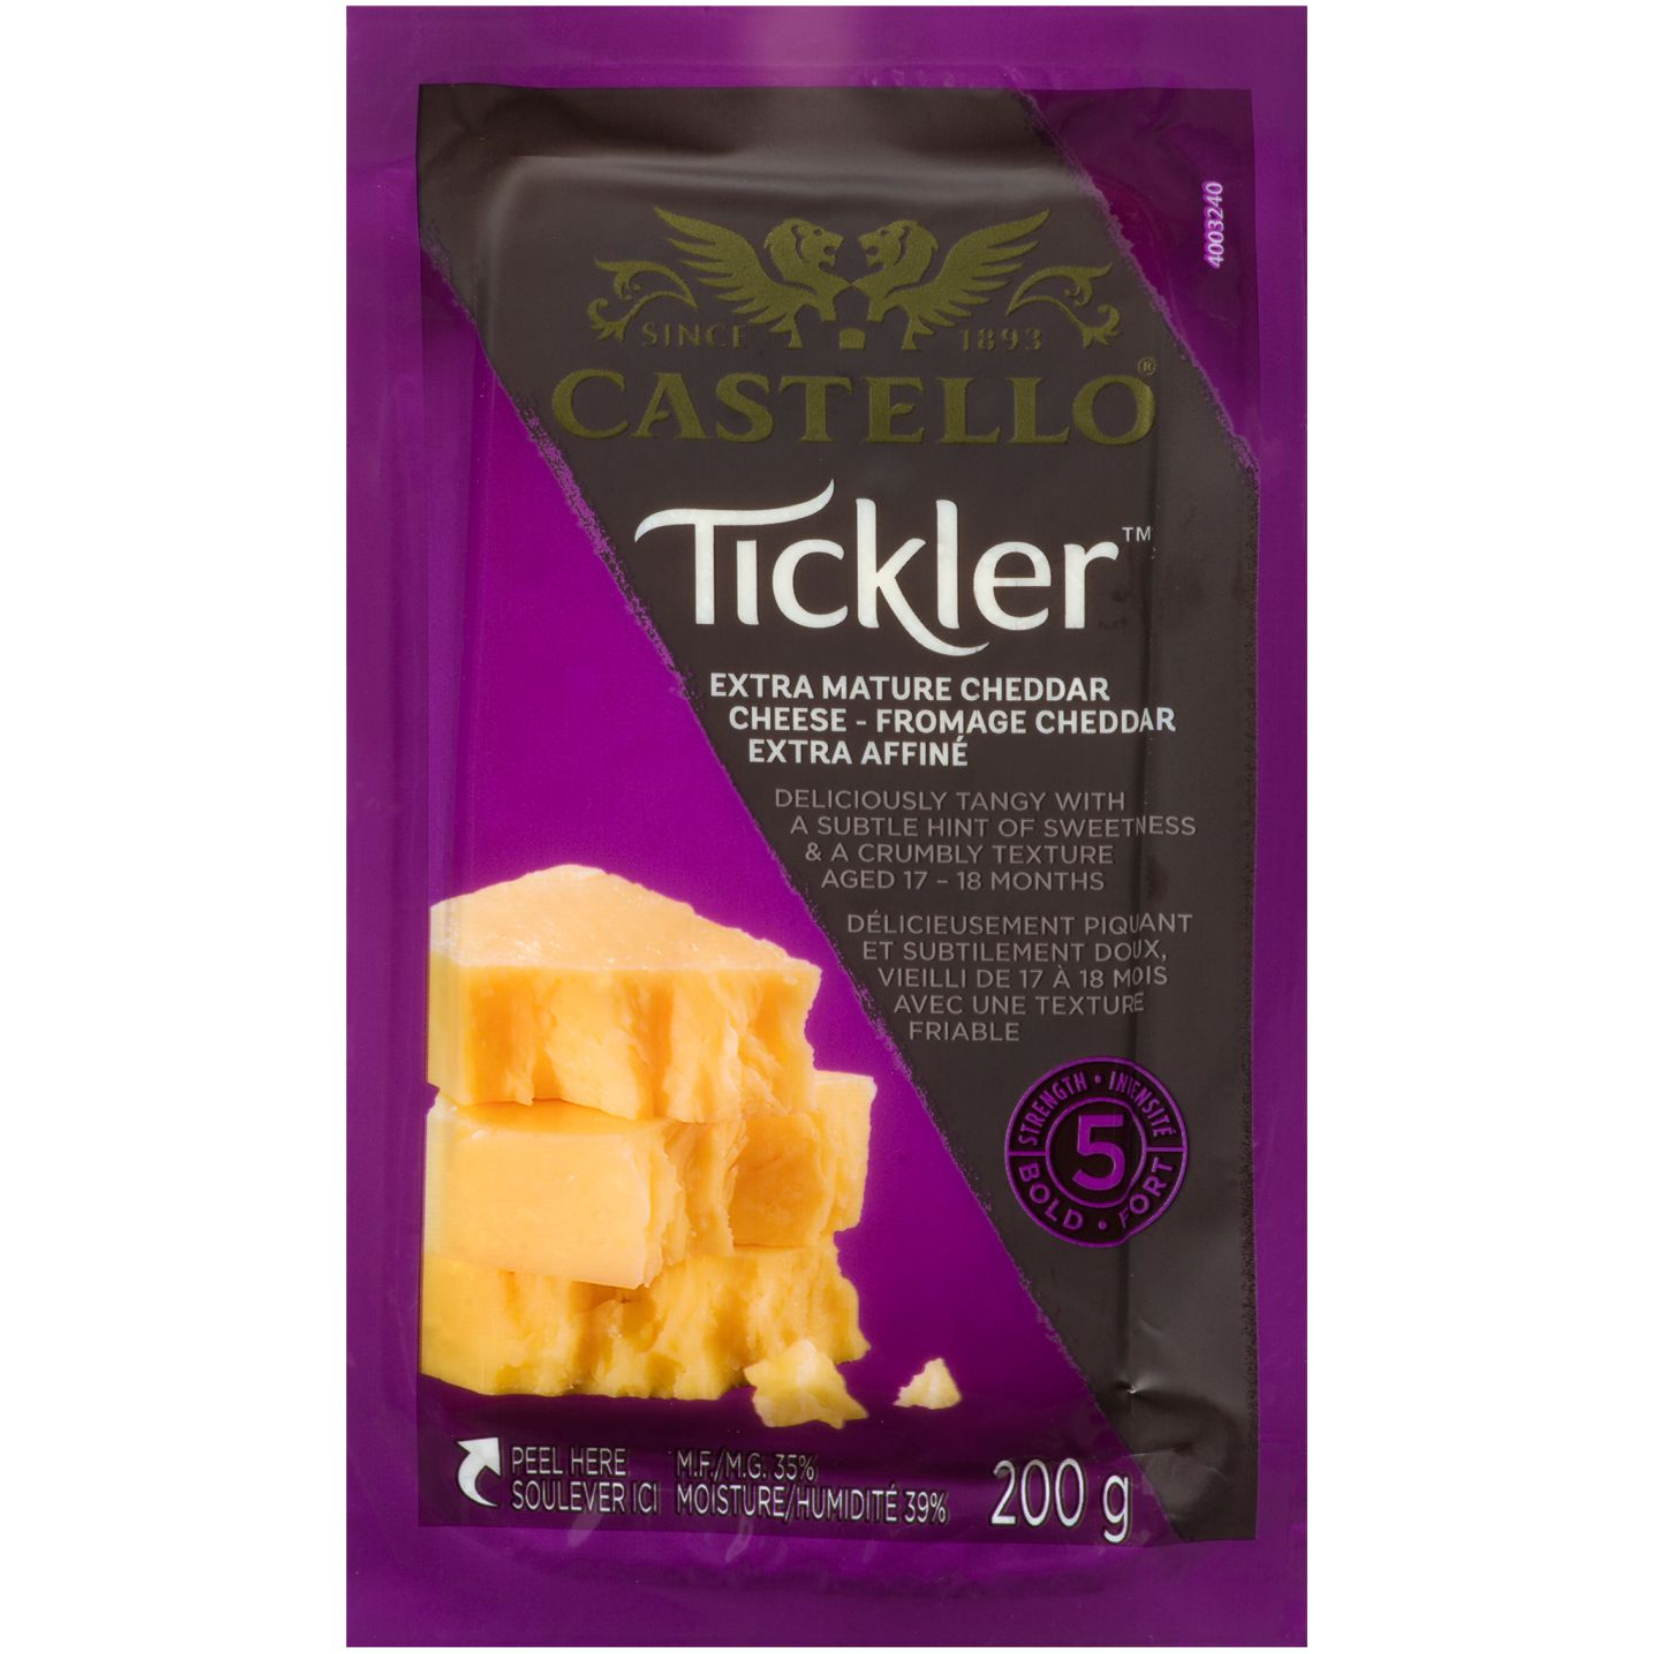 Castello Tickler Extra Mature Cheddar Cheese 200g